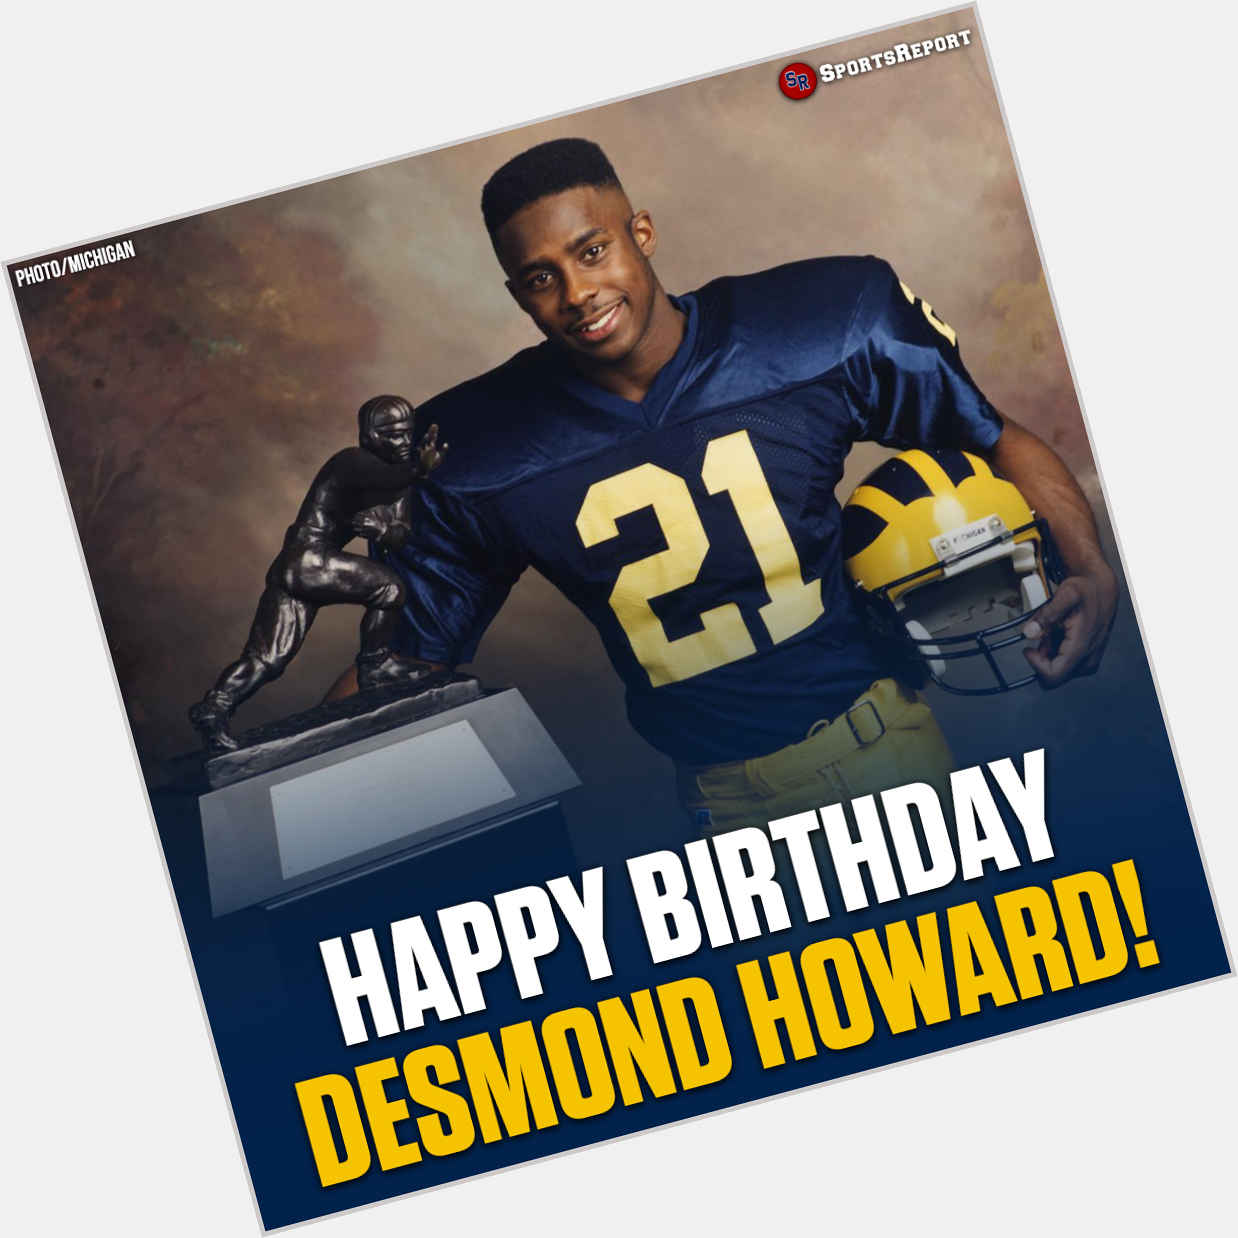  Fans, let\s wish LEGEND Desmond Howard a Happy Birthday!! 